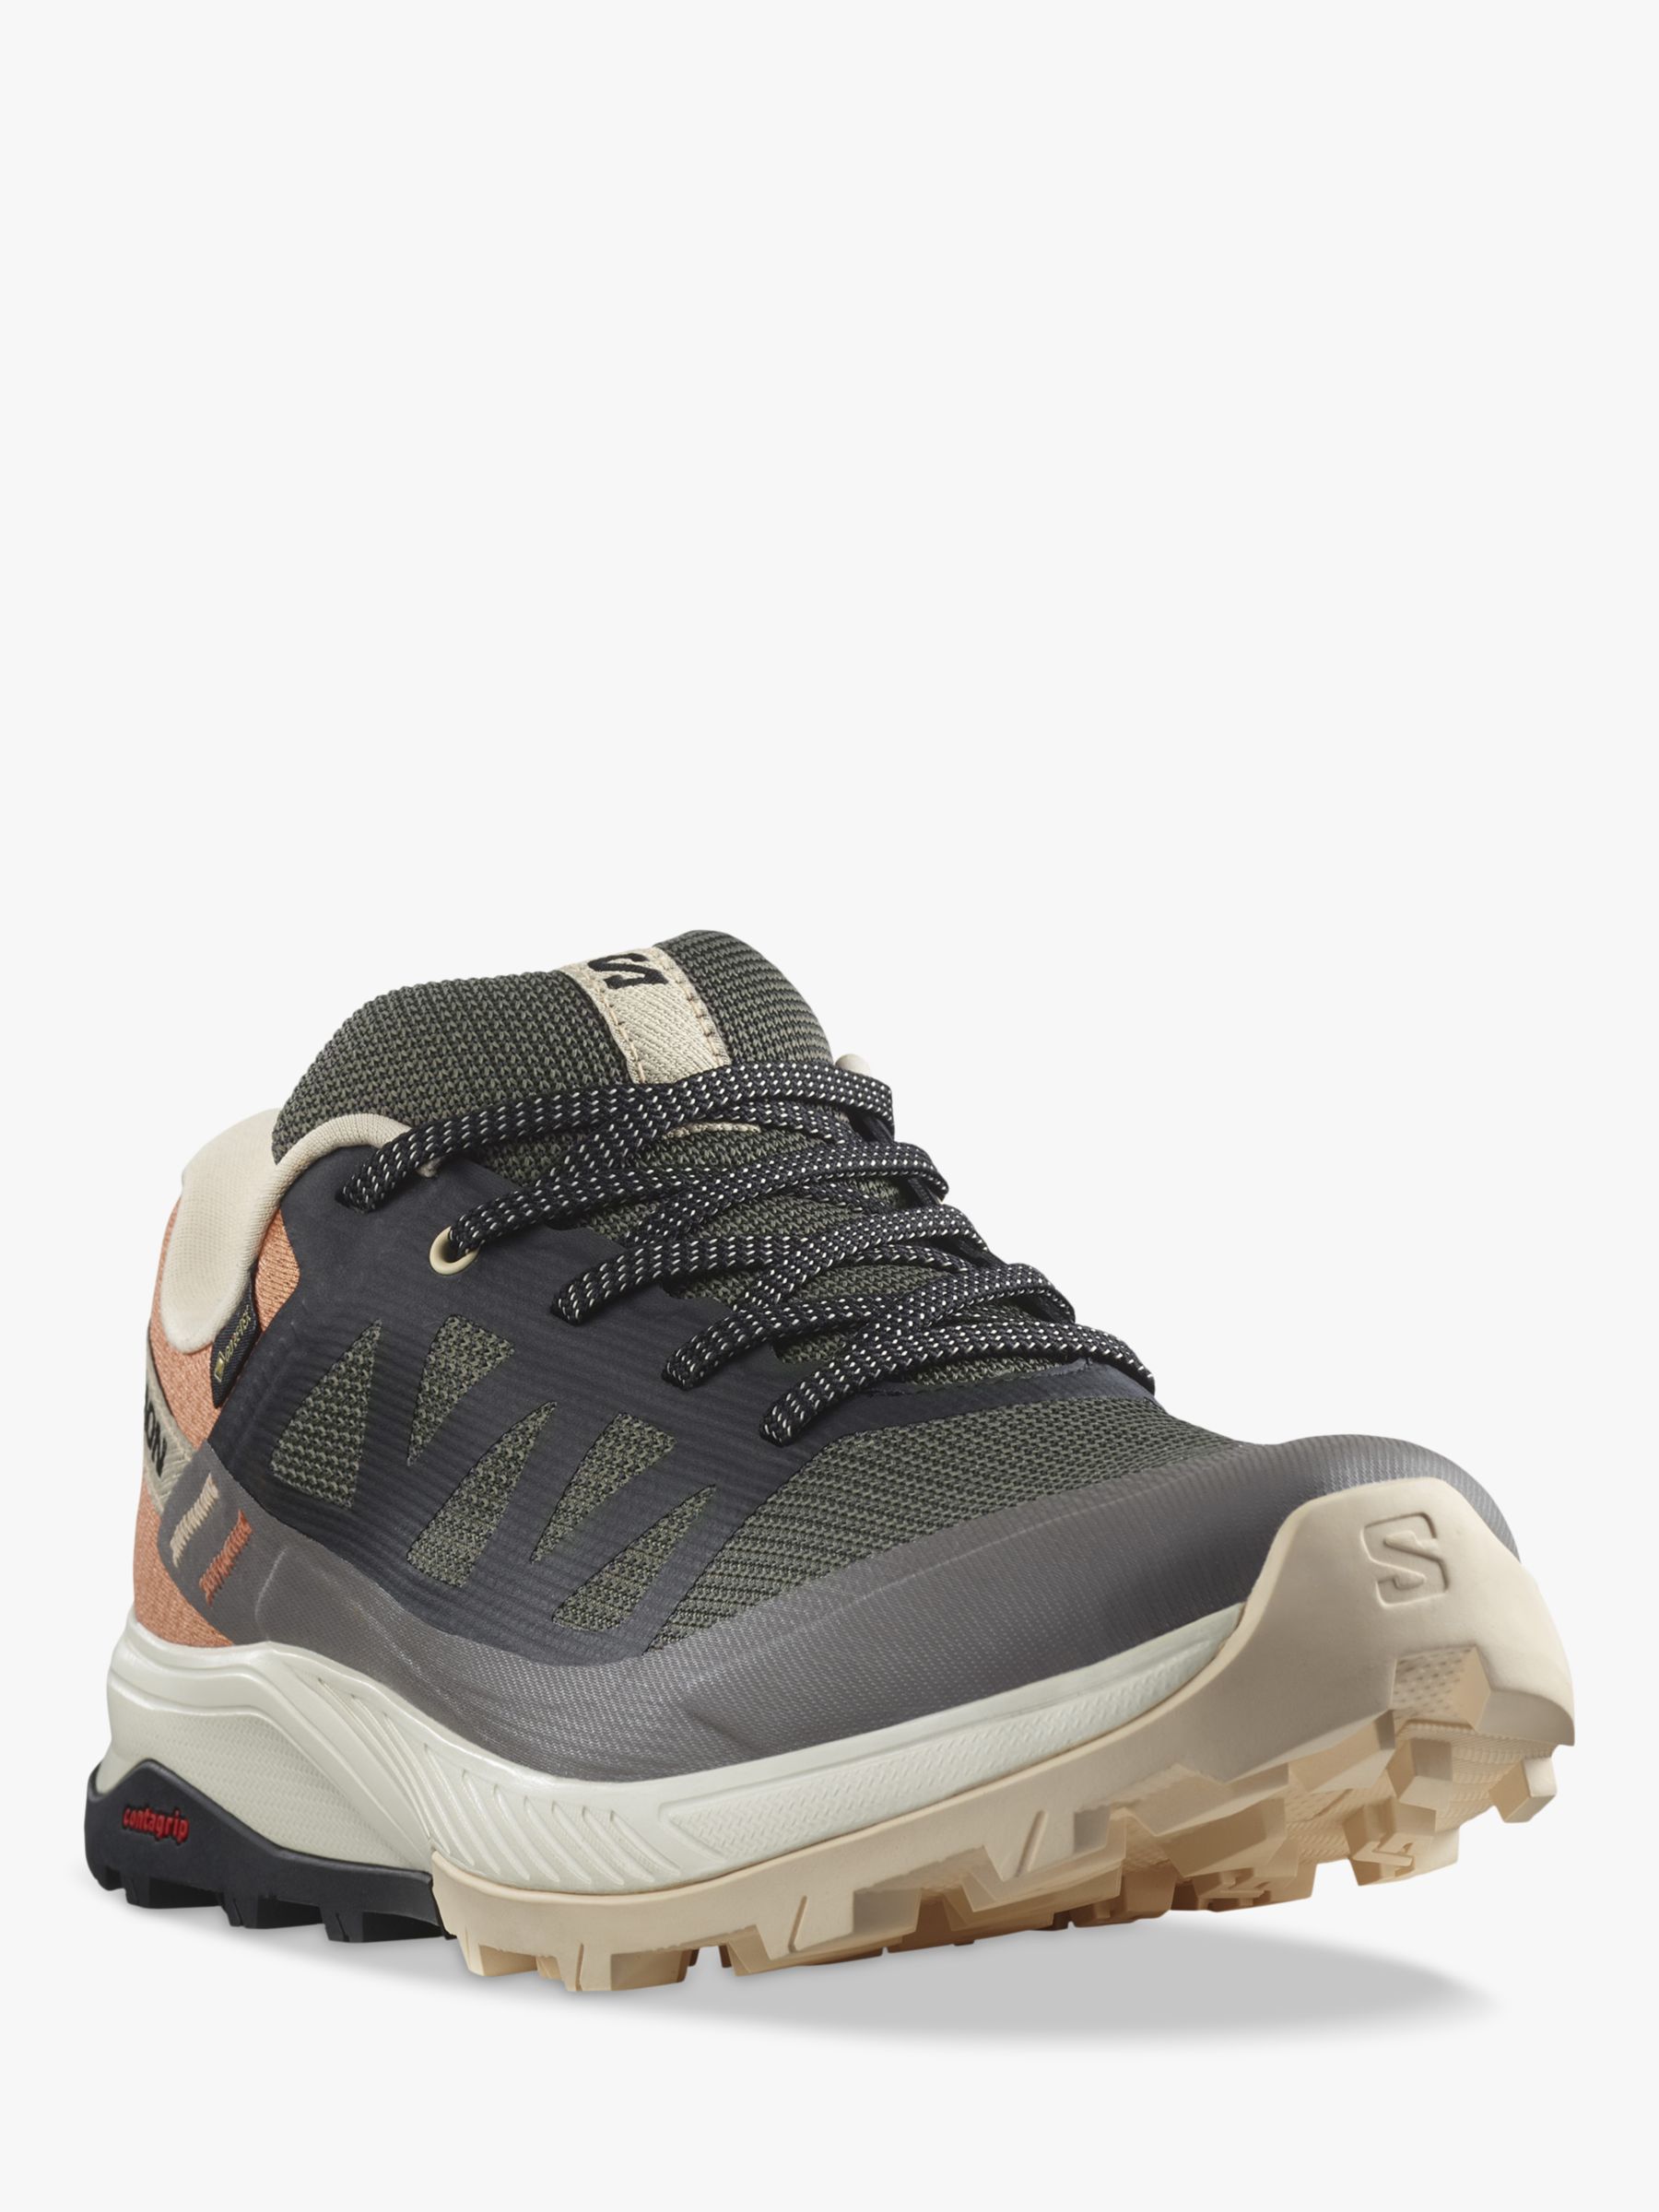 Salomon Outrise Women's Waterproof Gore-Tex Hiking Shoes, Magnet/Black, 4